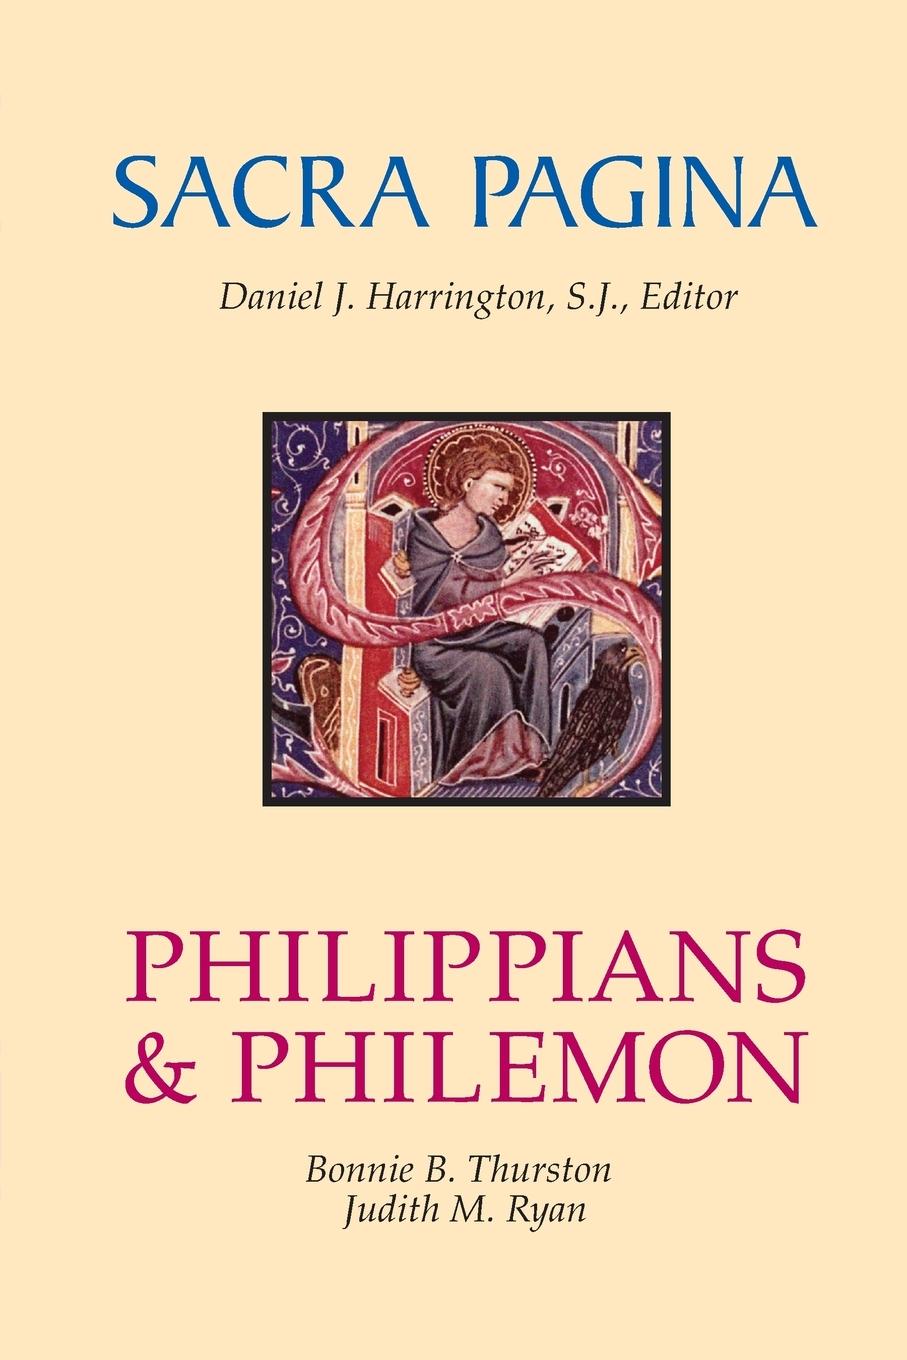 Philippians and Philemon - Ryan, Judith Thurston, Bonnie Beattie